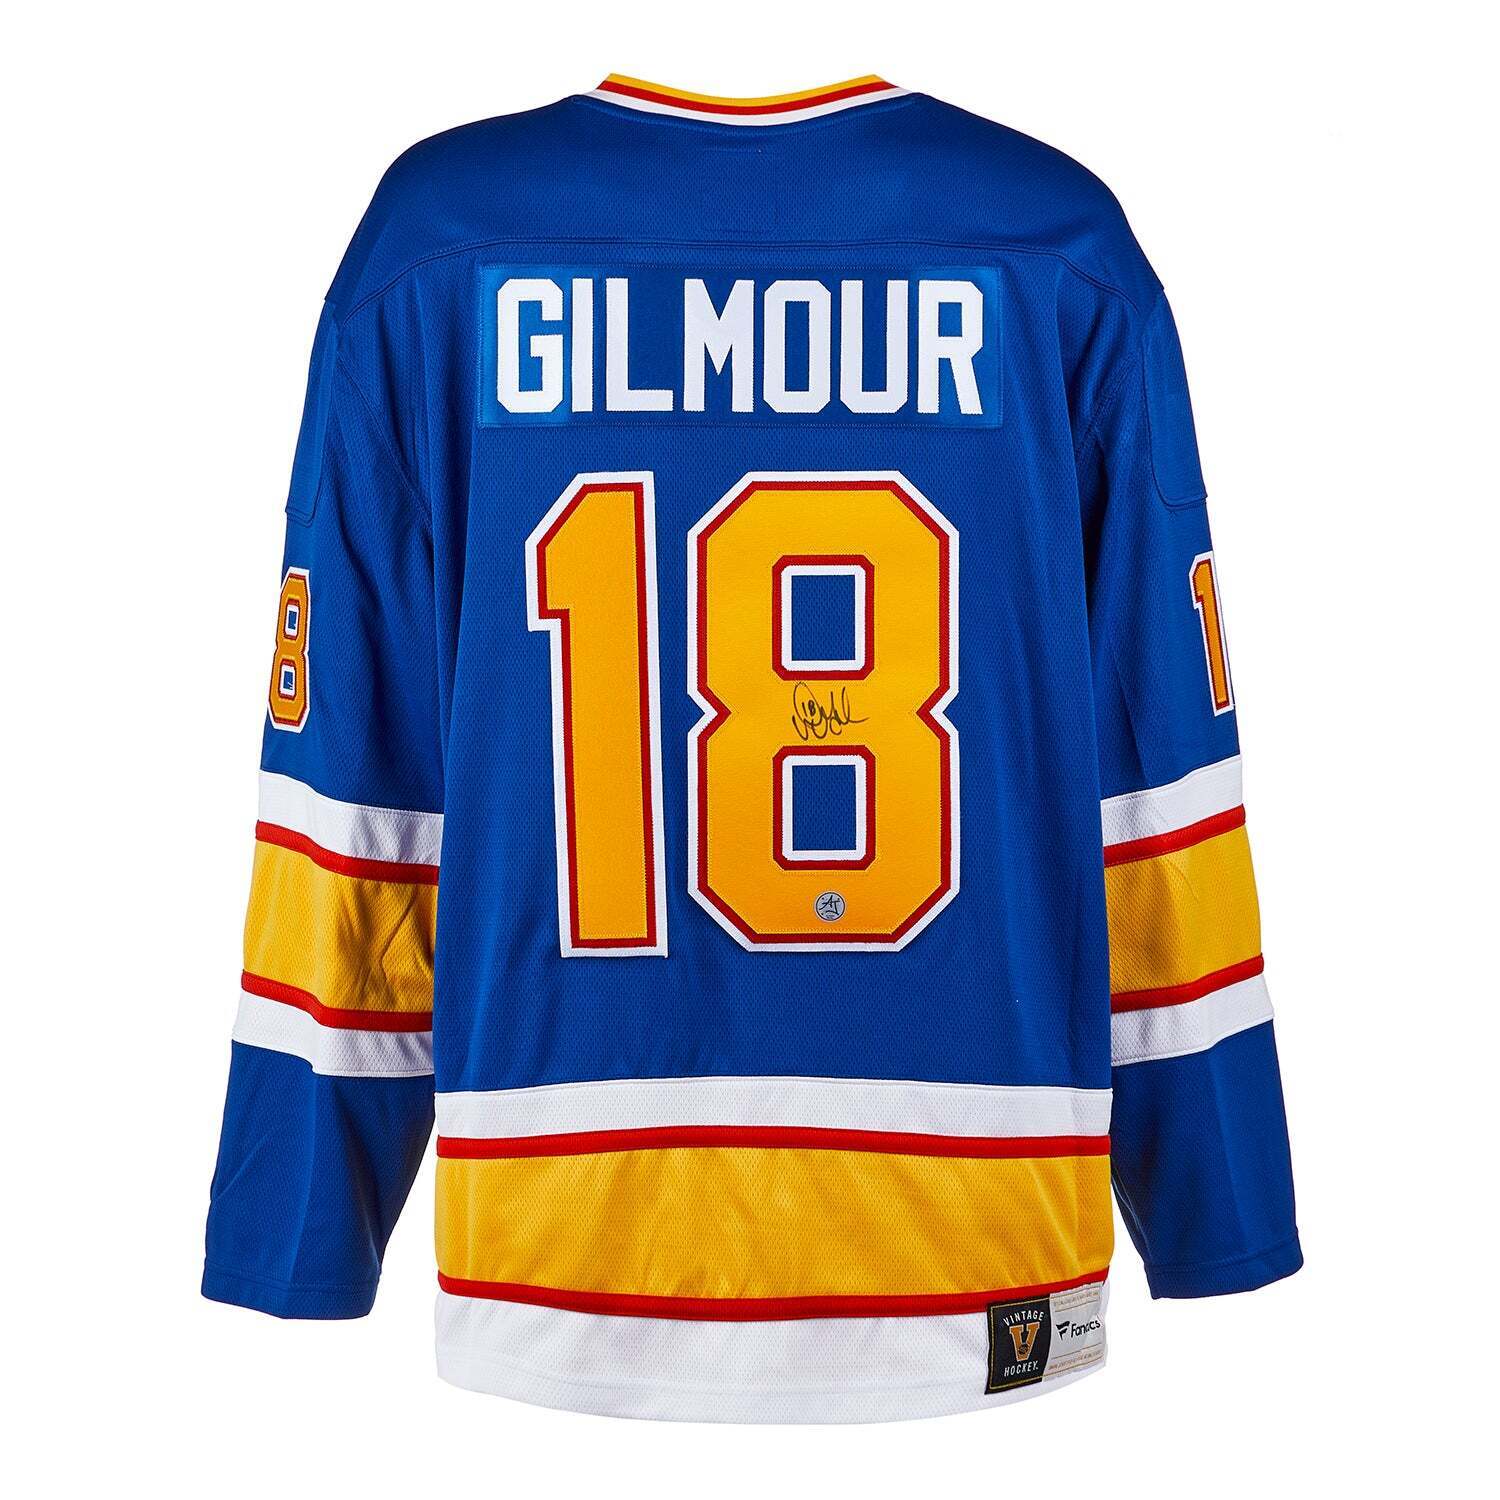 Doug Gilmour Signed Toronto Maple Leafs Fanatics Vintage Jersey (blue)